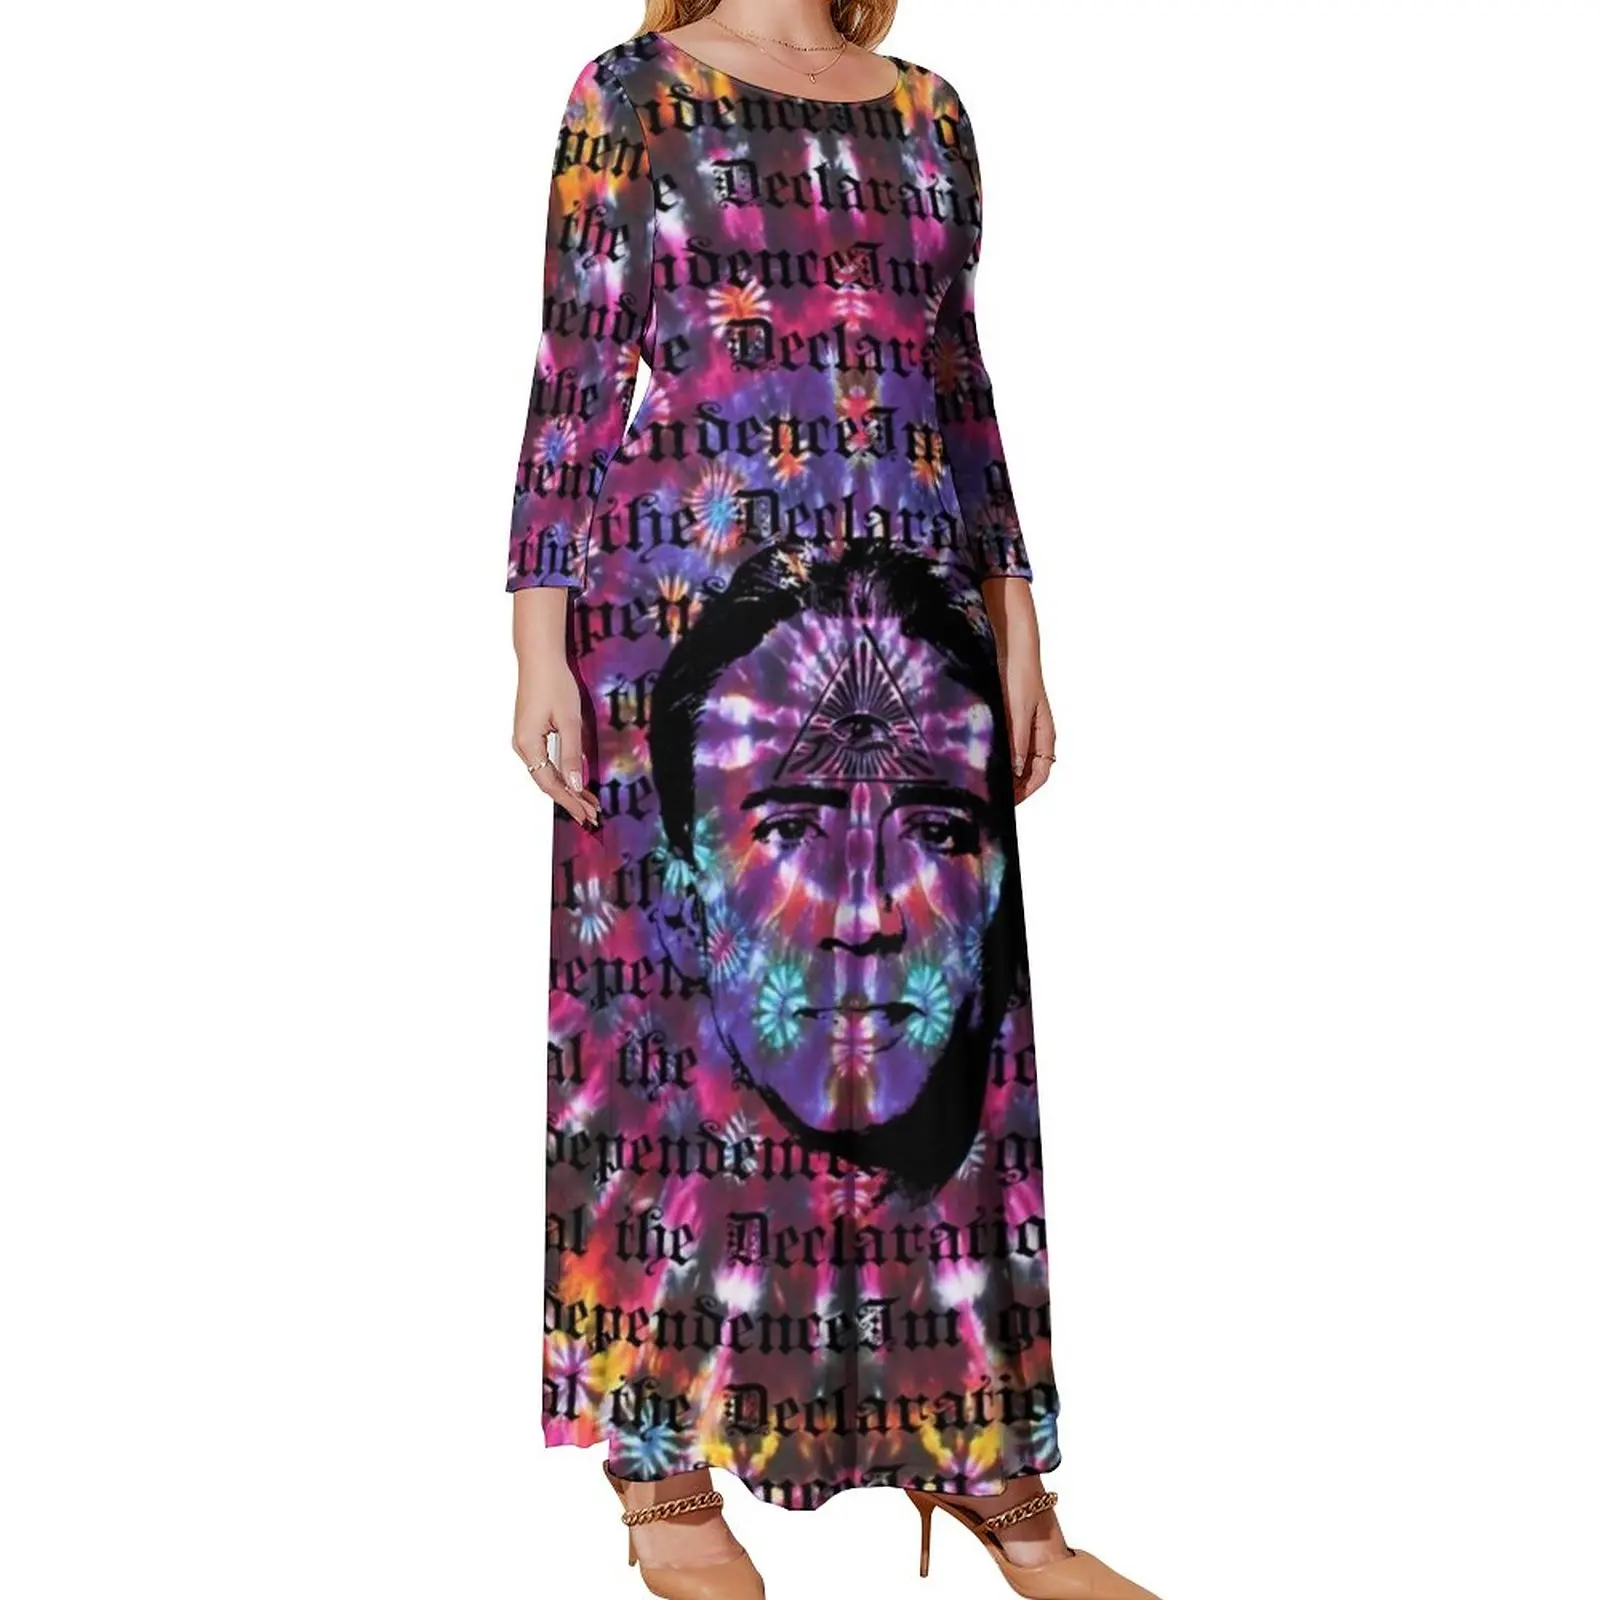 Nicolas Cage Third Eye Dress Tie Dye Shambhala Maxi Dress Street Style Boho Beach Long Dresses Print Vestido Plus Size 3XL 4XL